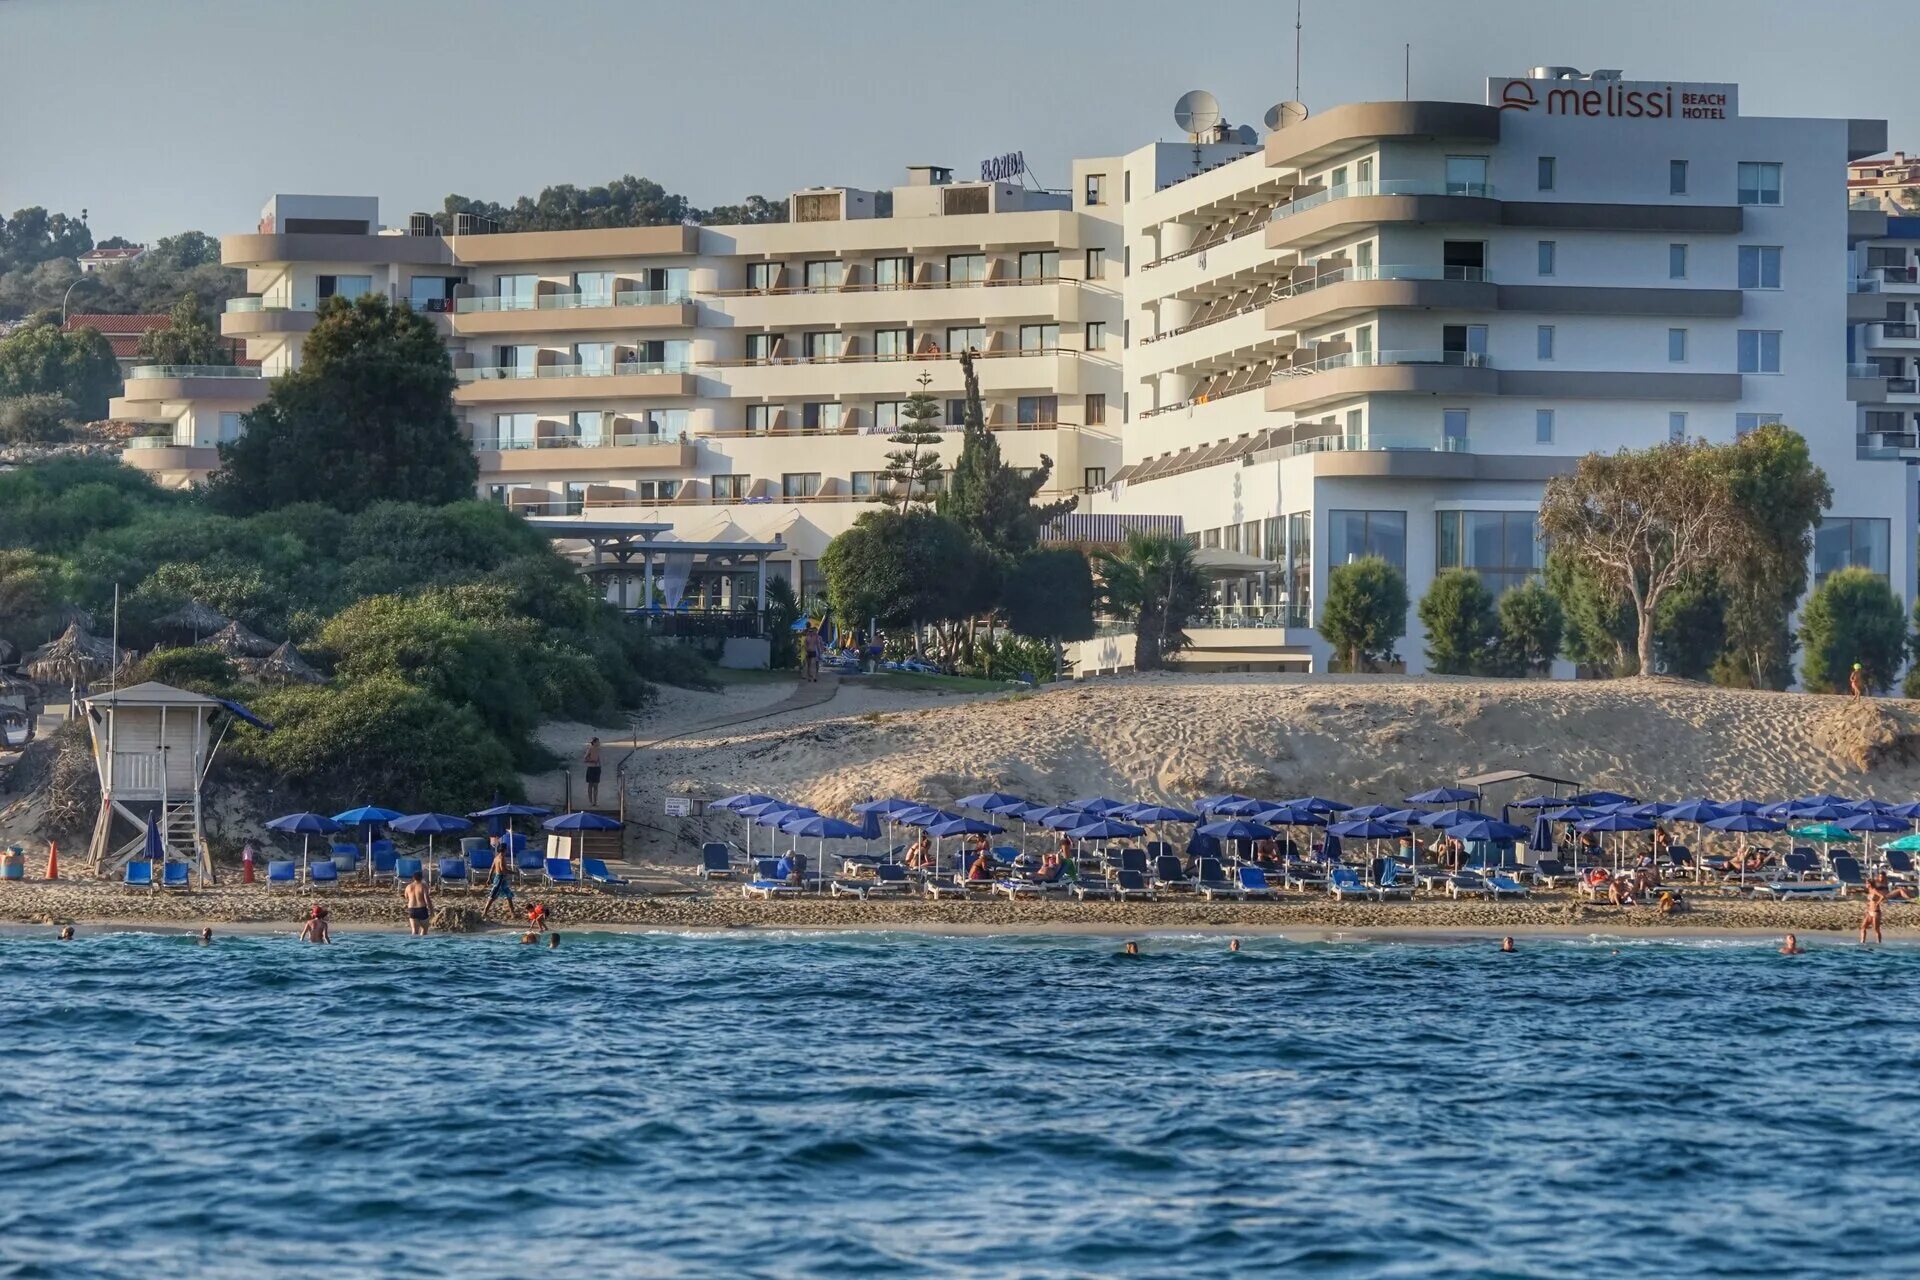 Xperia beach 4. Кипр отель Мелисси Бич 4. Айя - Напа отель Мелисси. Melissi Beach Hotel Spa Кипр Айя-Напа.